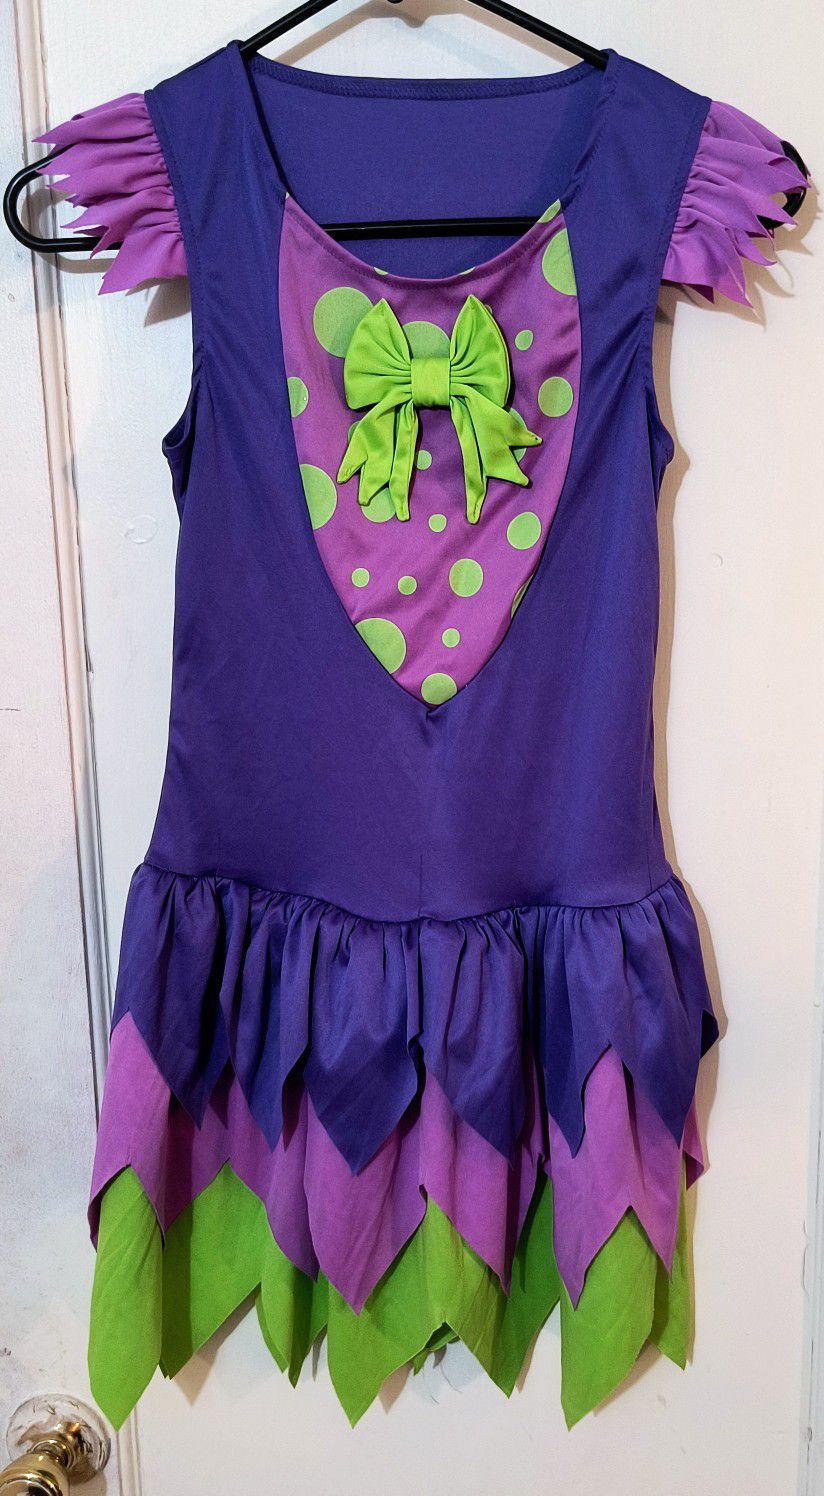 Gerty Growler Purple Junior Halloween Costume Dress By Leg Avenue Size Jr S/P